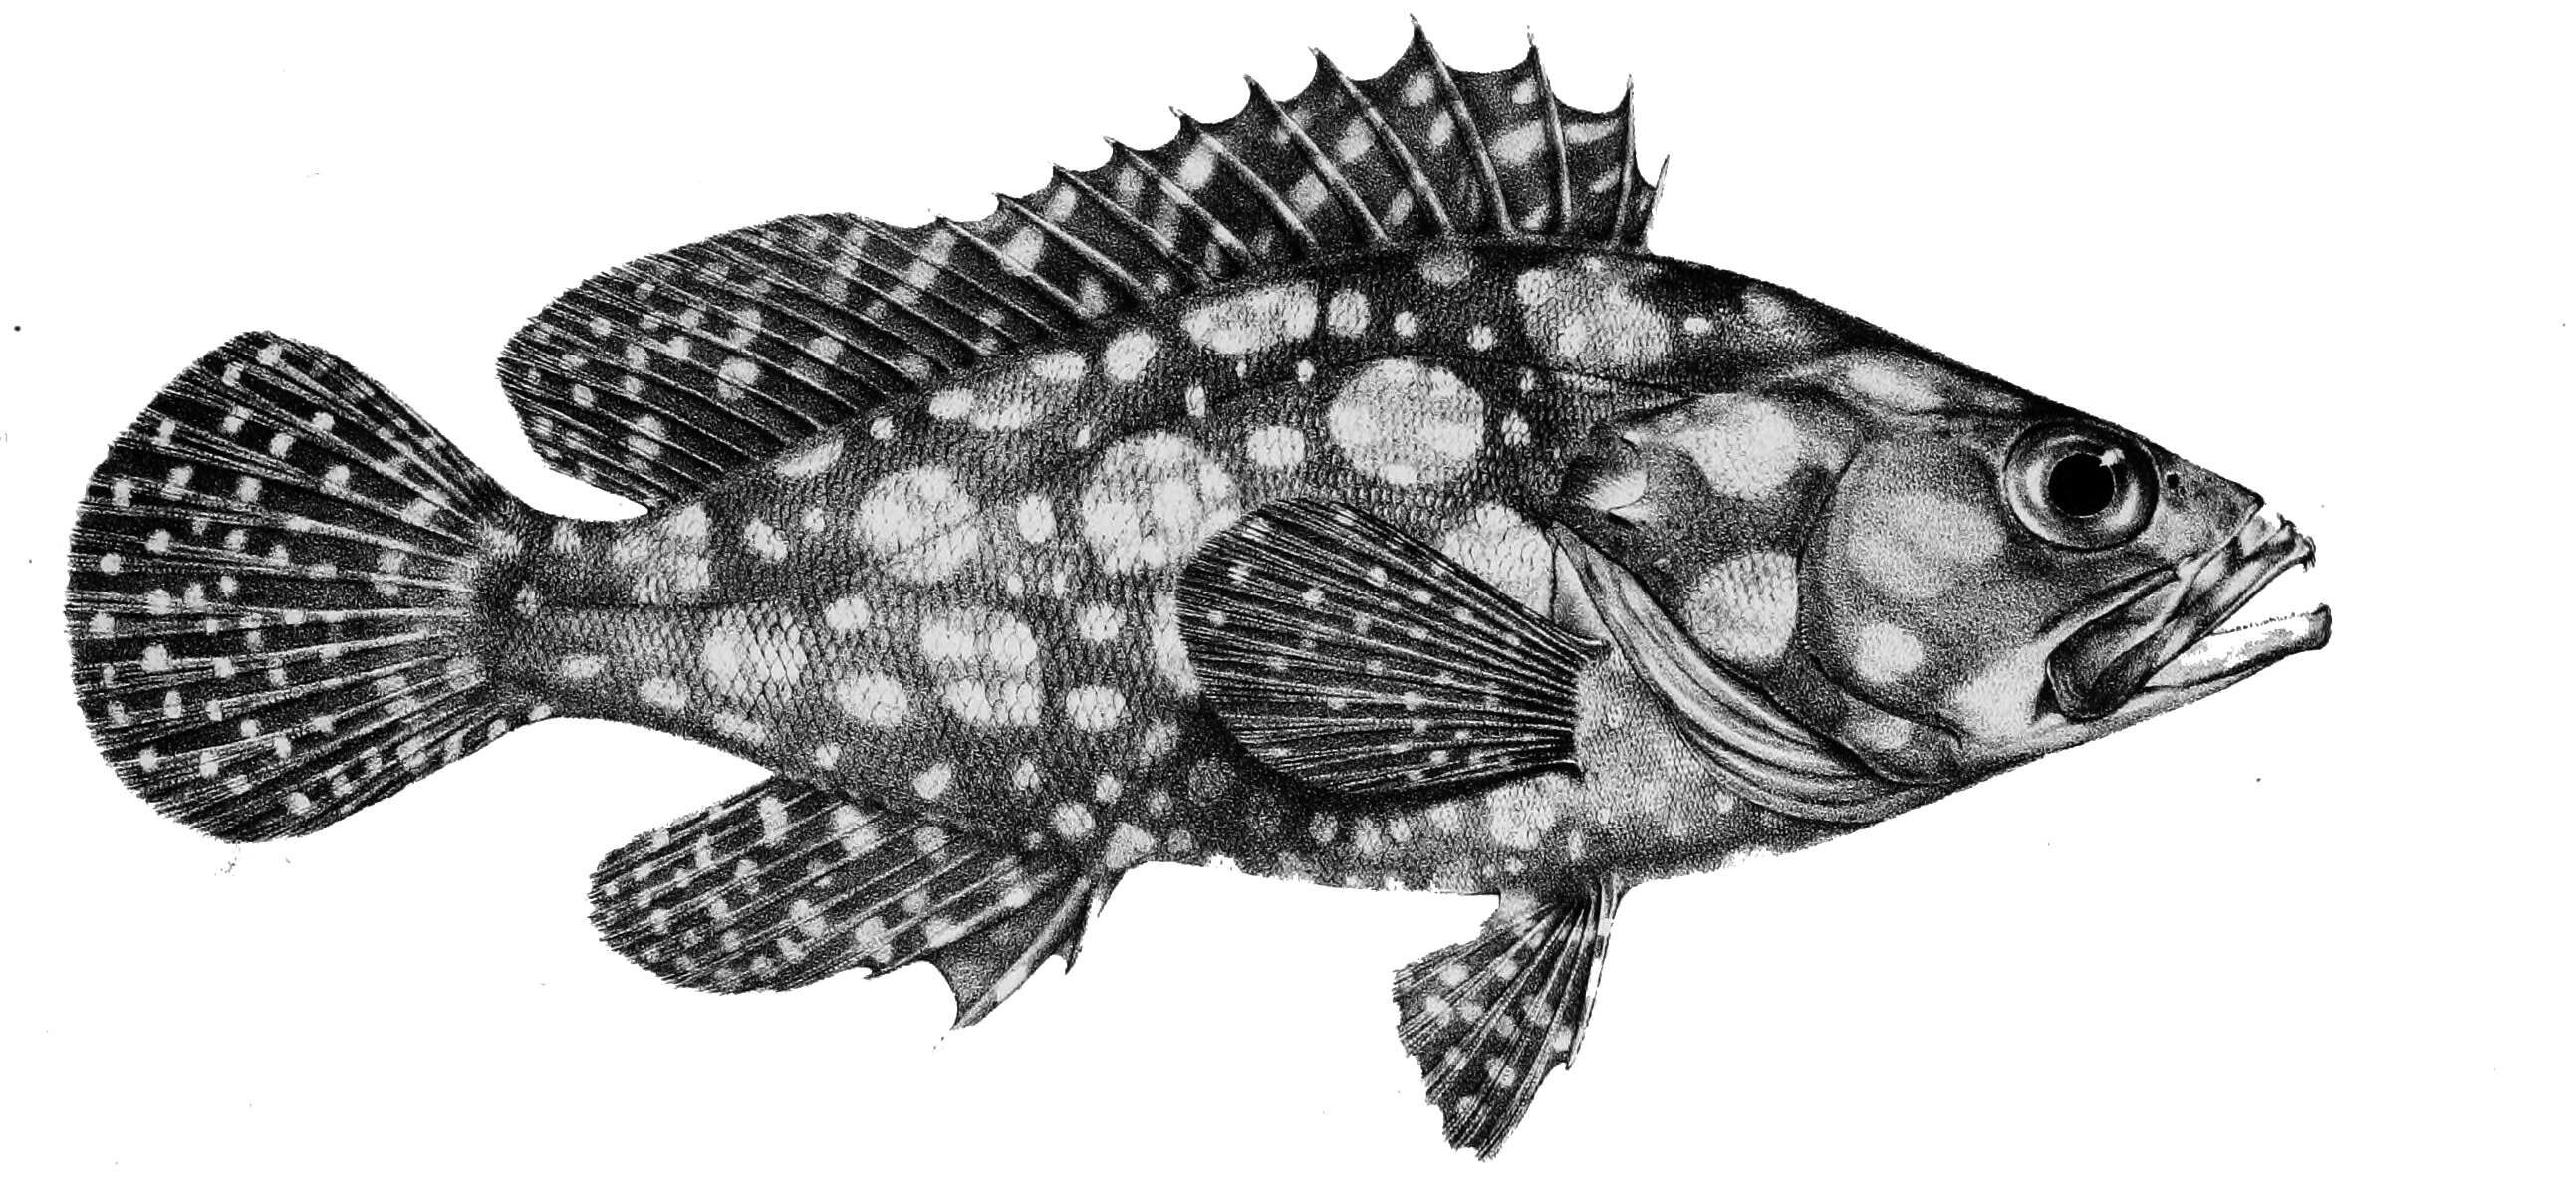 Epinephelus ongus (Bloch 1790) resmi